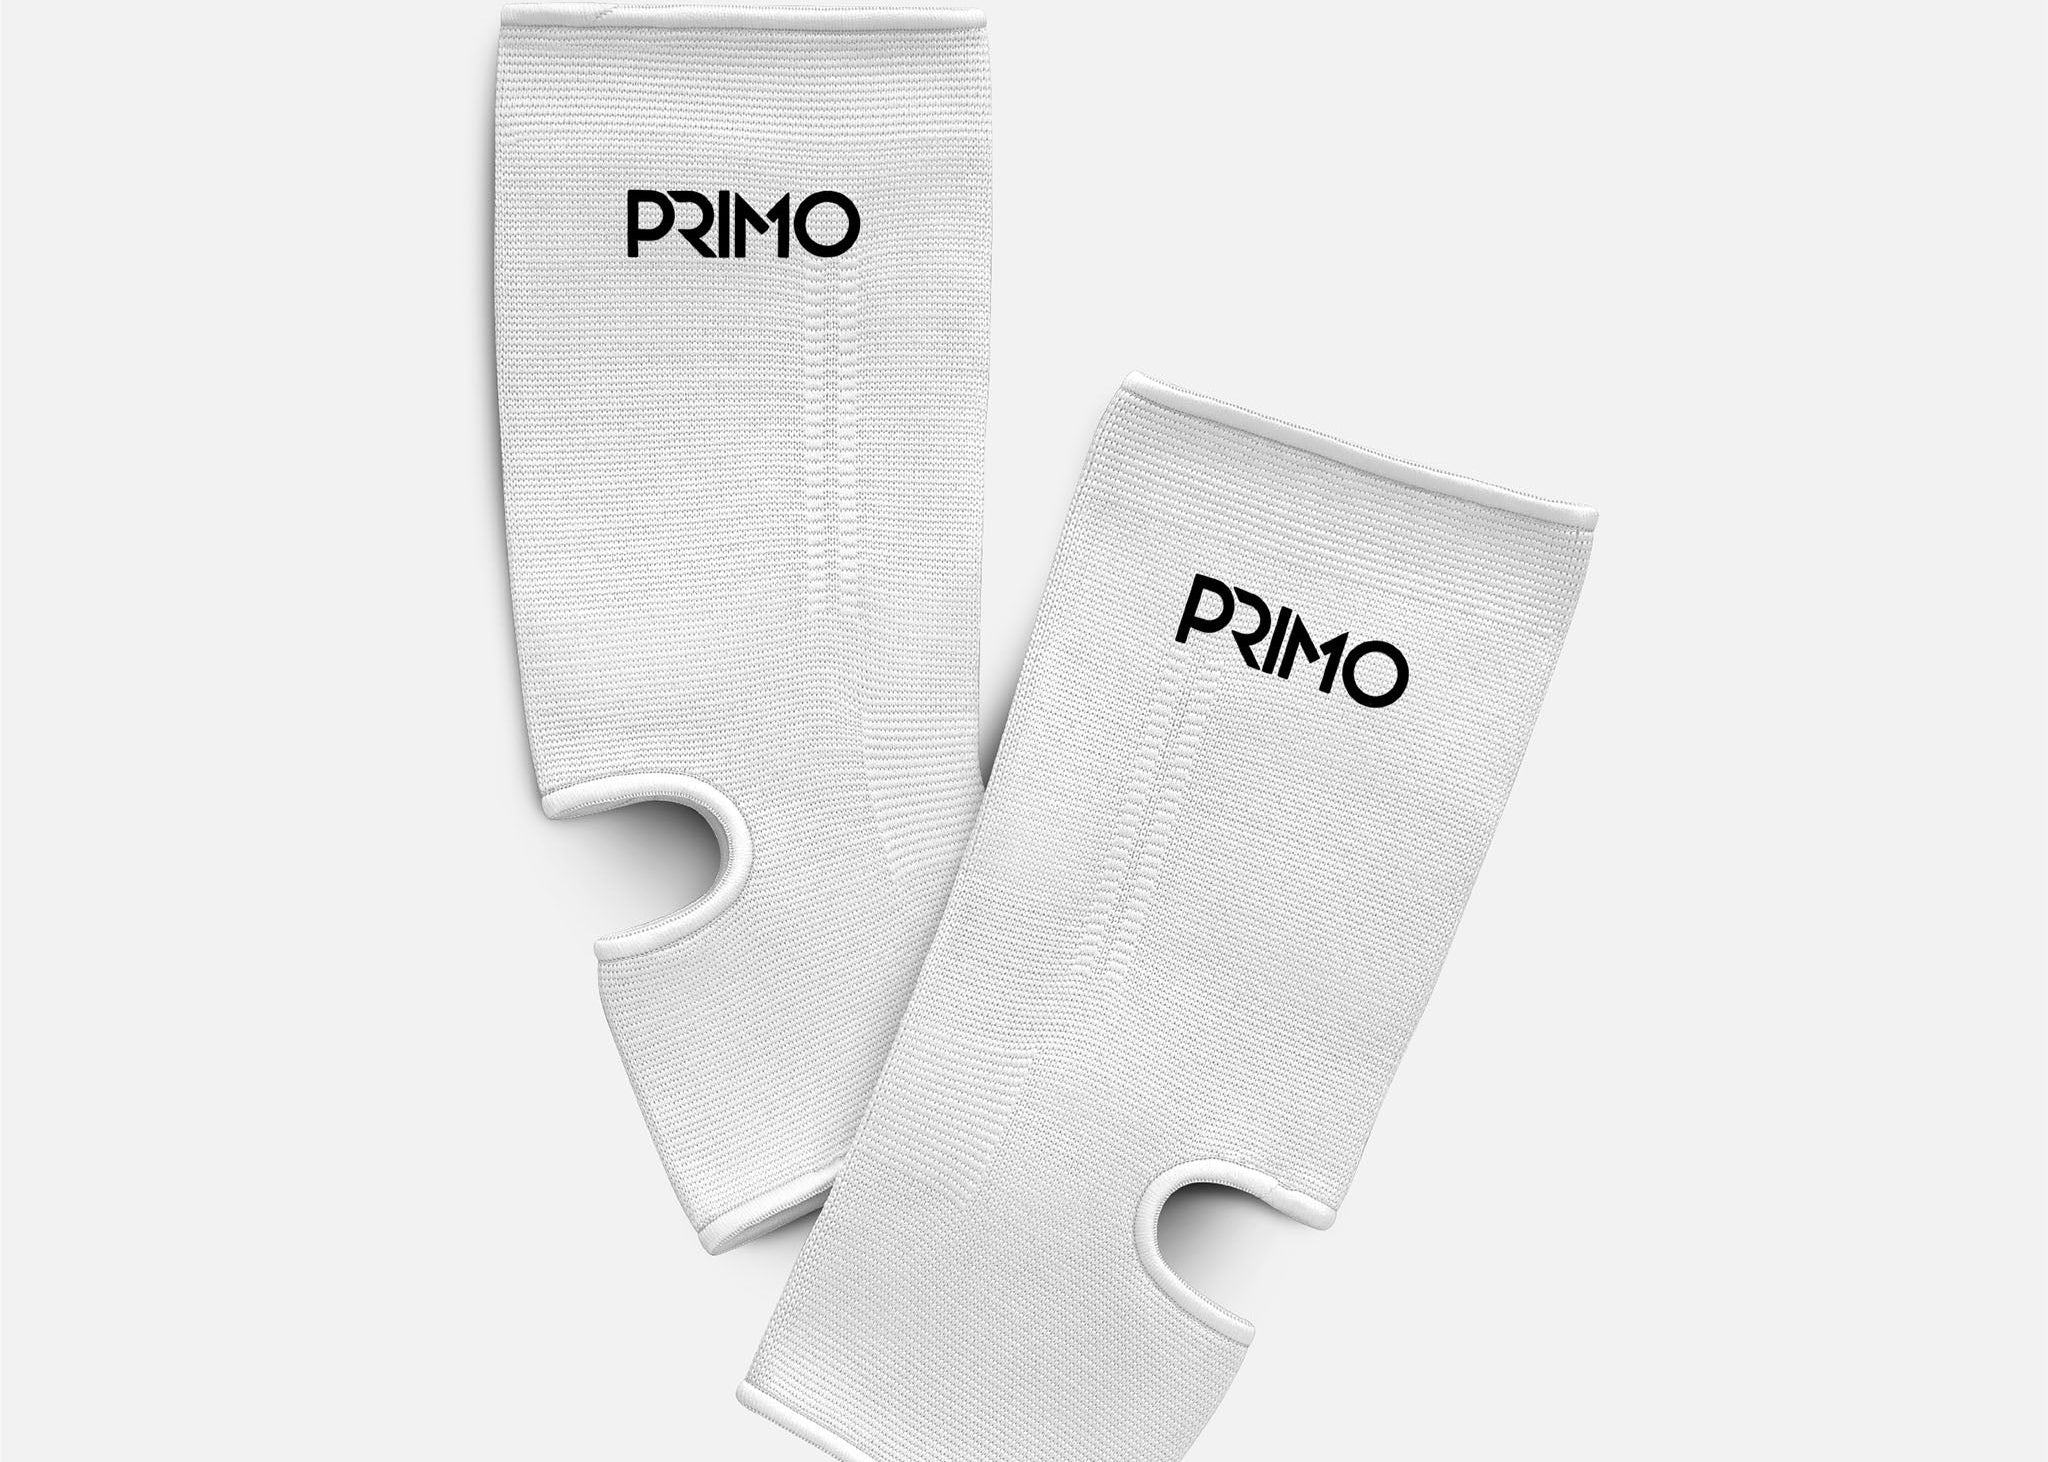 Primo Fight Wear Official Primo Monochrome Ankleguards - White